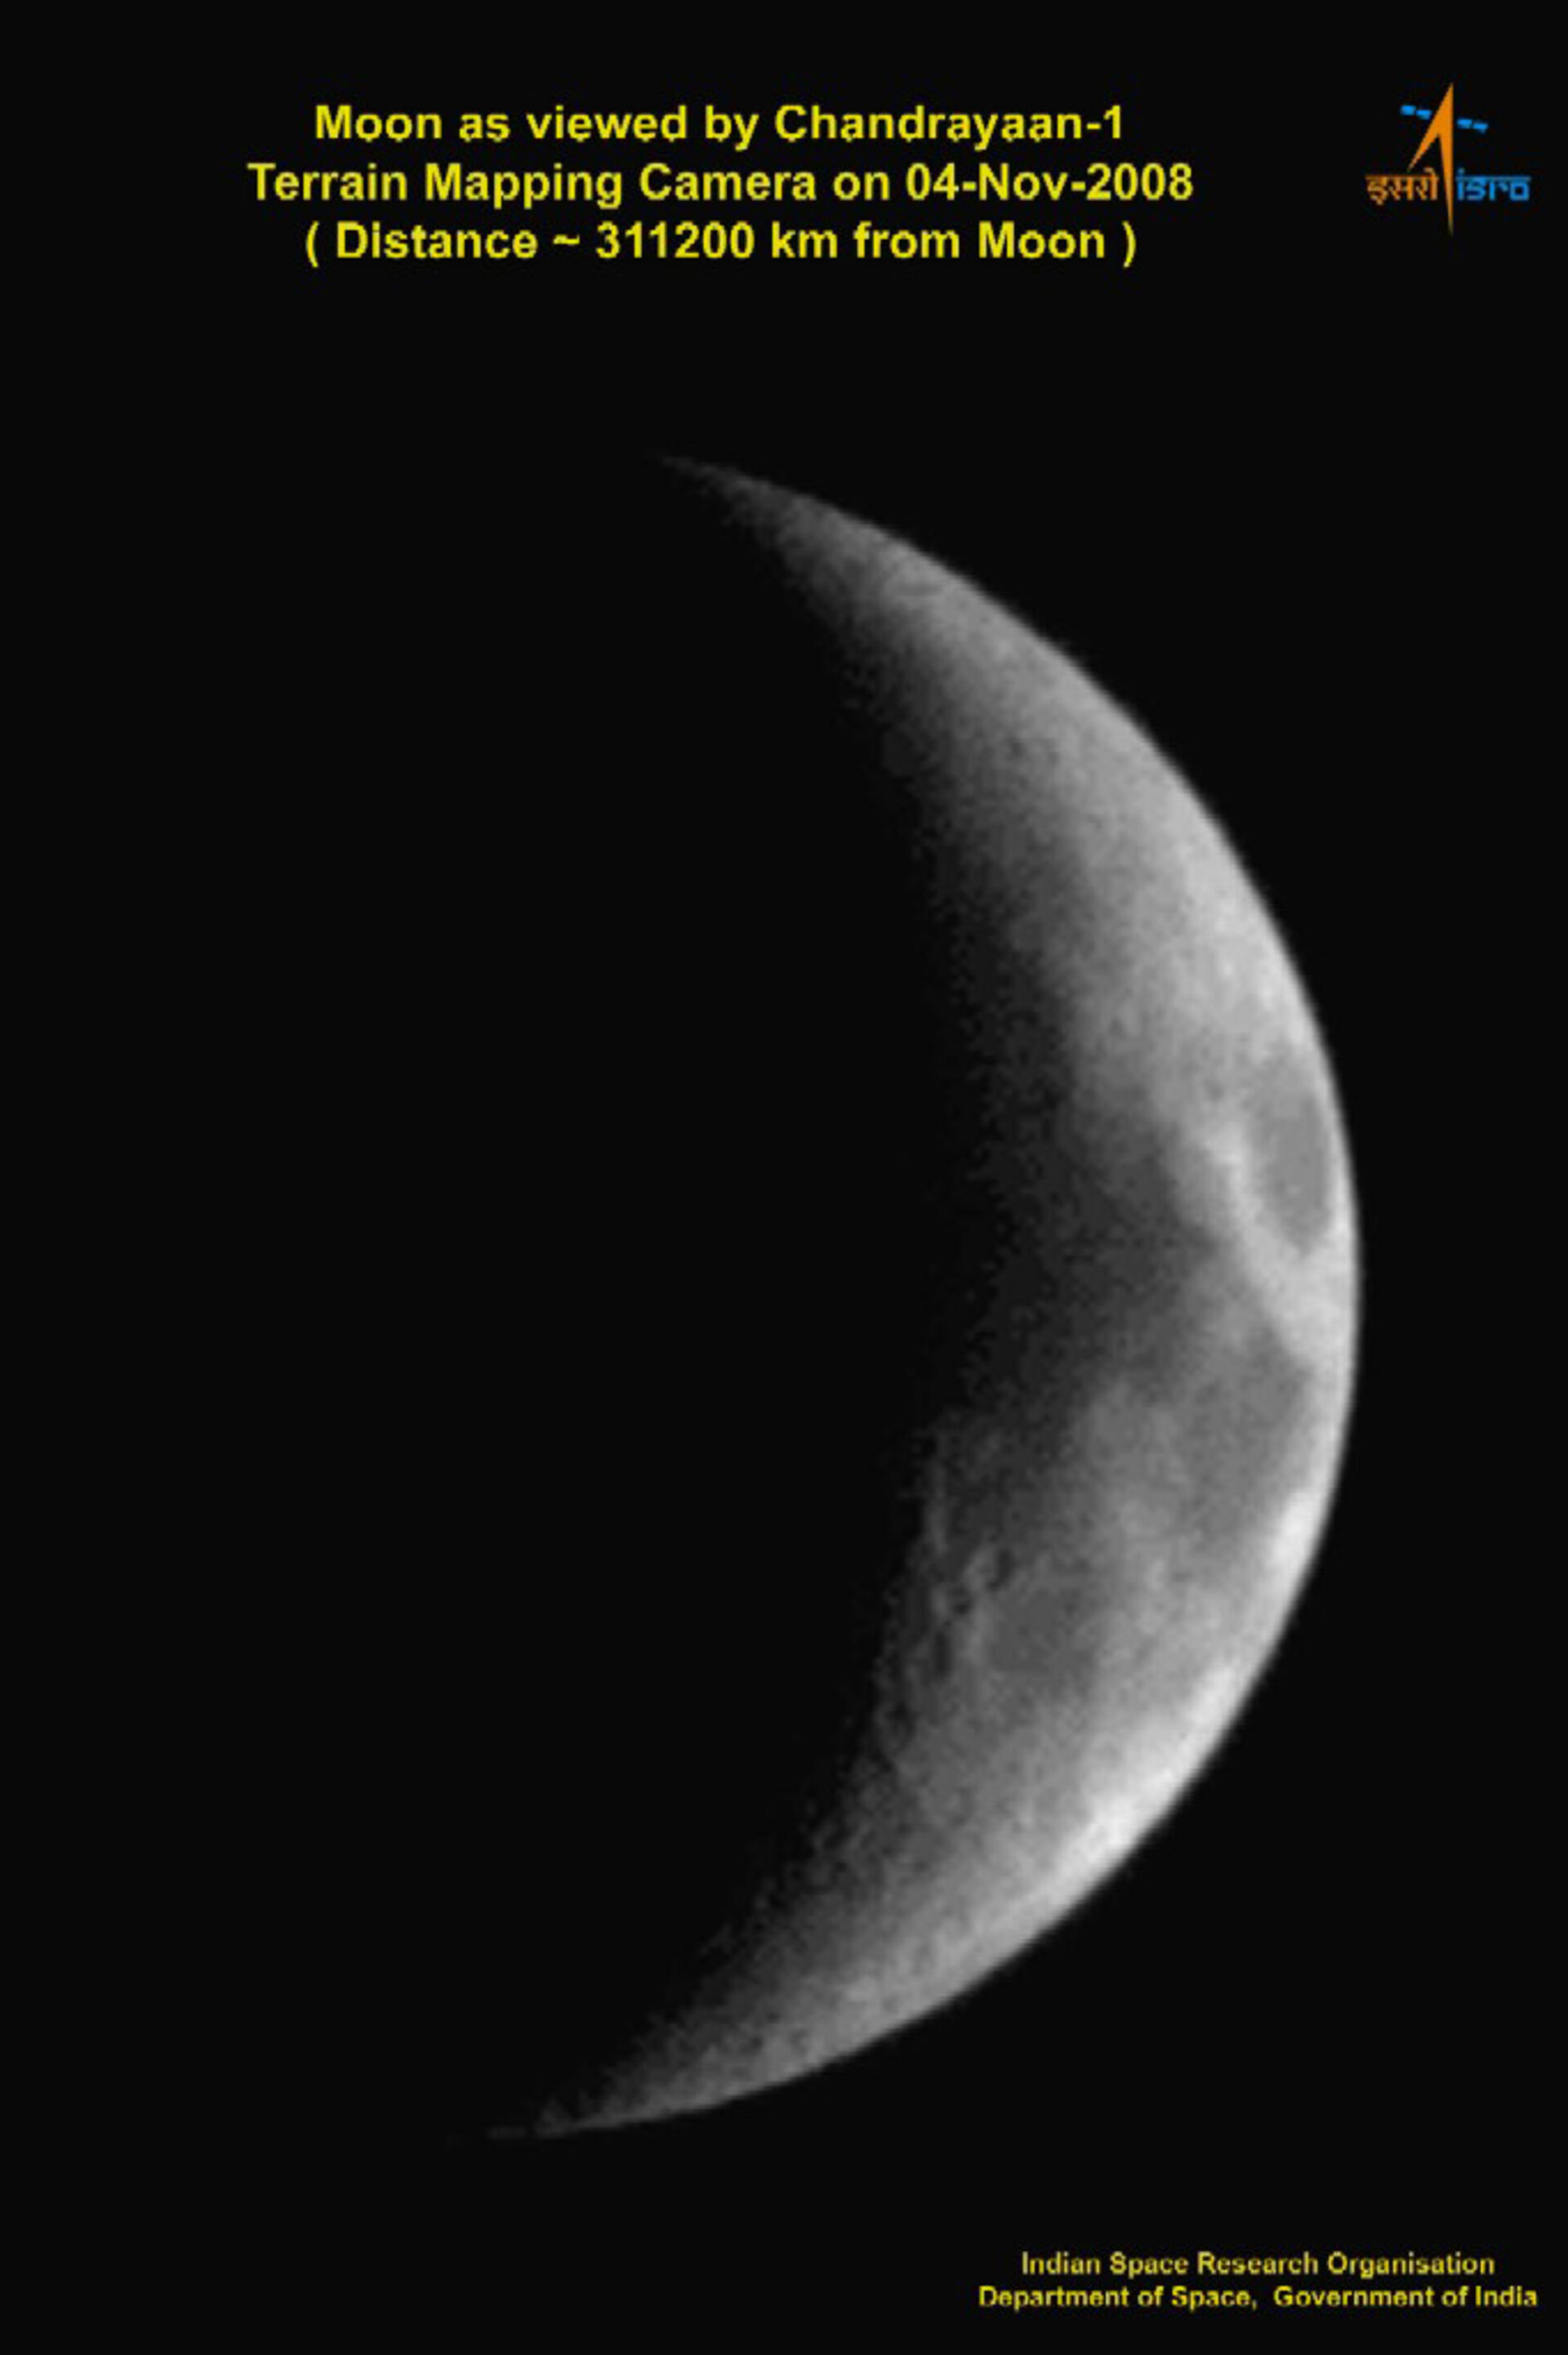 The Moon, seen by Chandrayaan-1